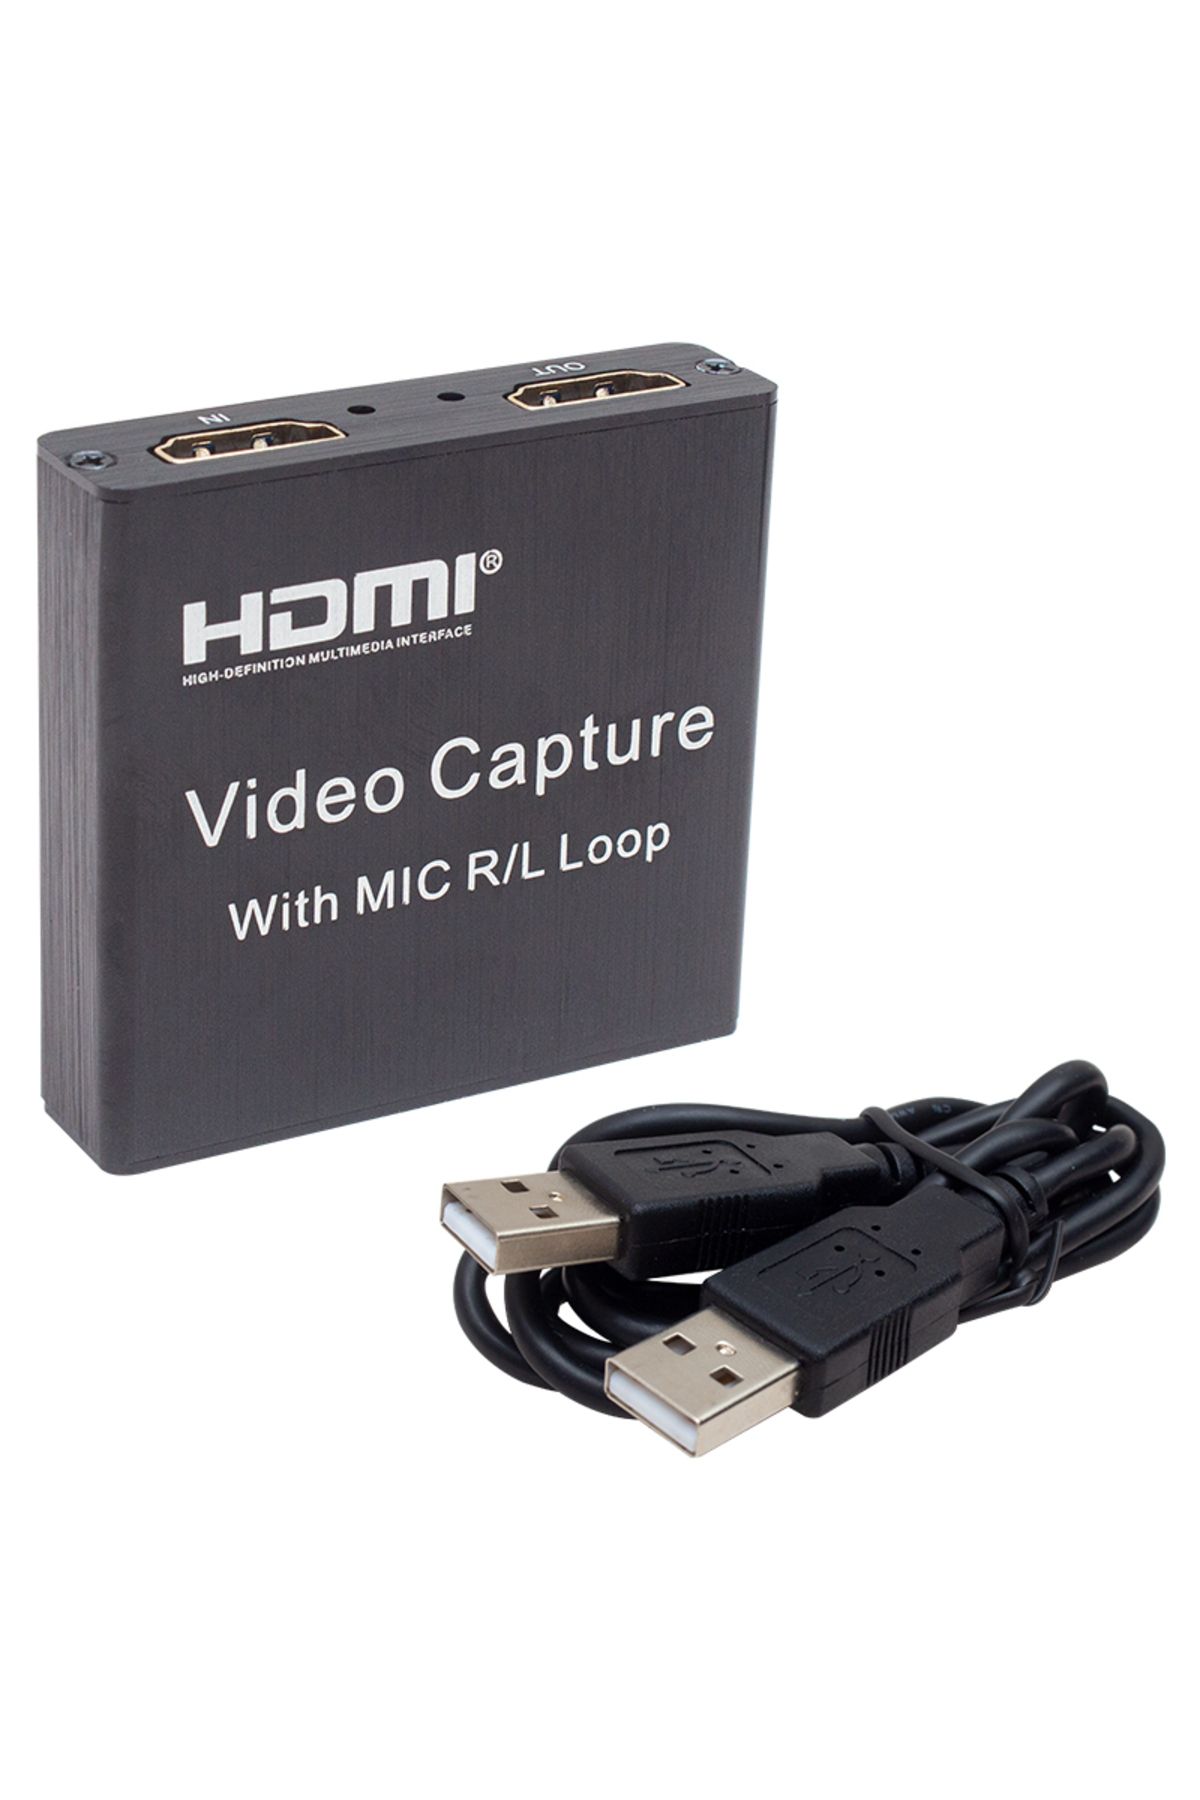 Powermaster PM-2620 4K HDMI UYUMLU 1080P USB 2.0 VİDEO CAPTURE KART